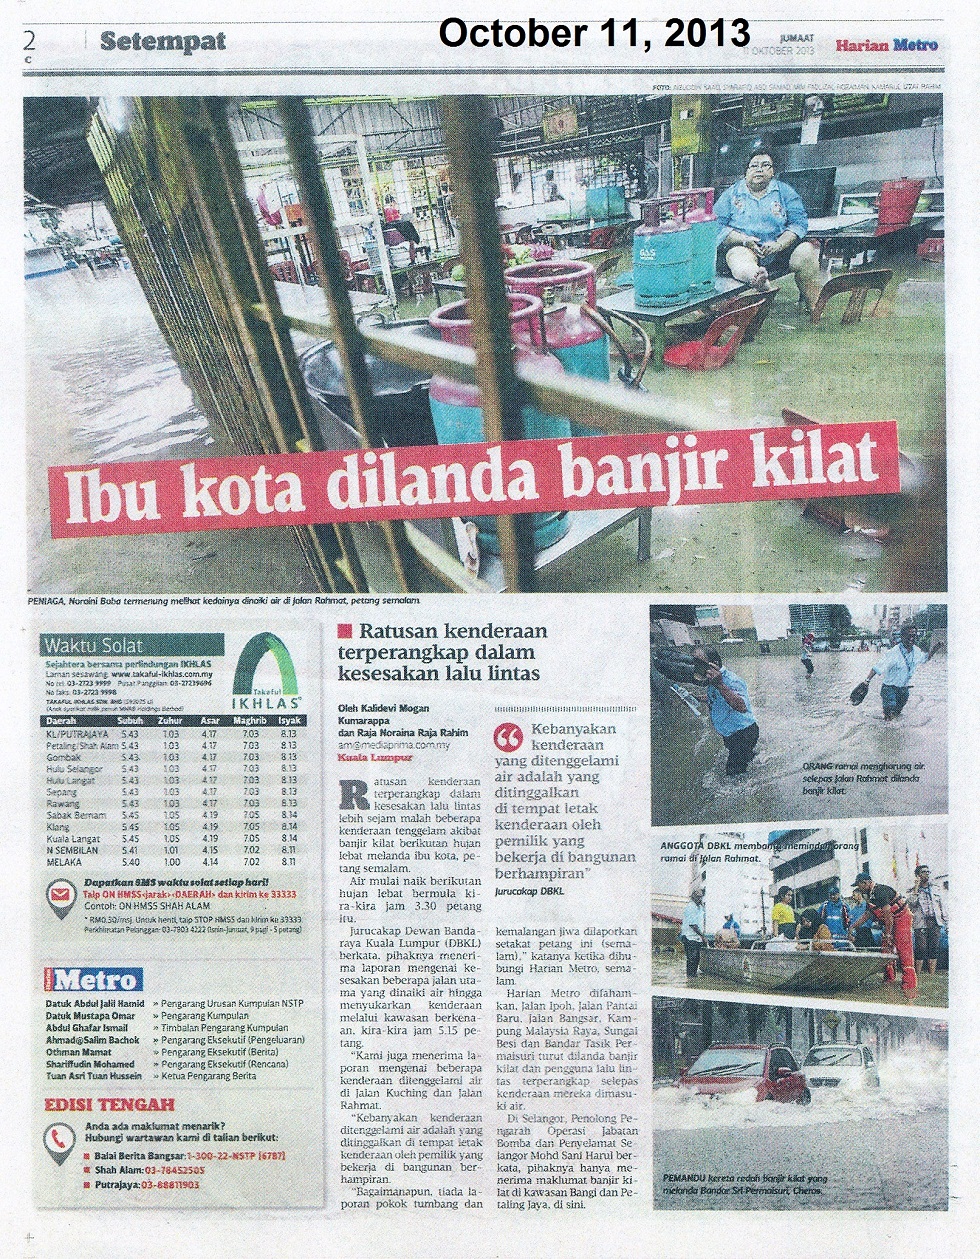 Harian Metro_Ibu kota dilanda banjir kilat_11 Oct 2013_pg 2 980